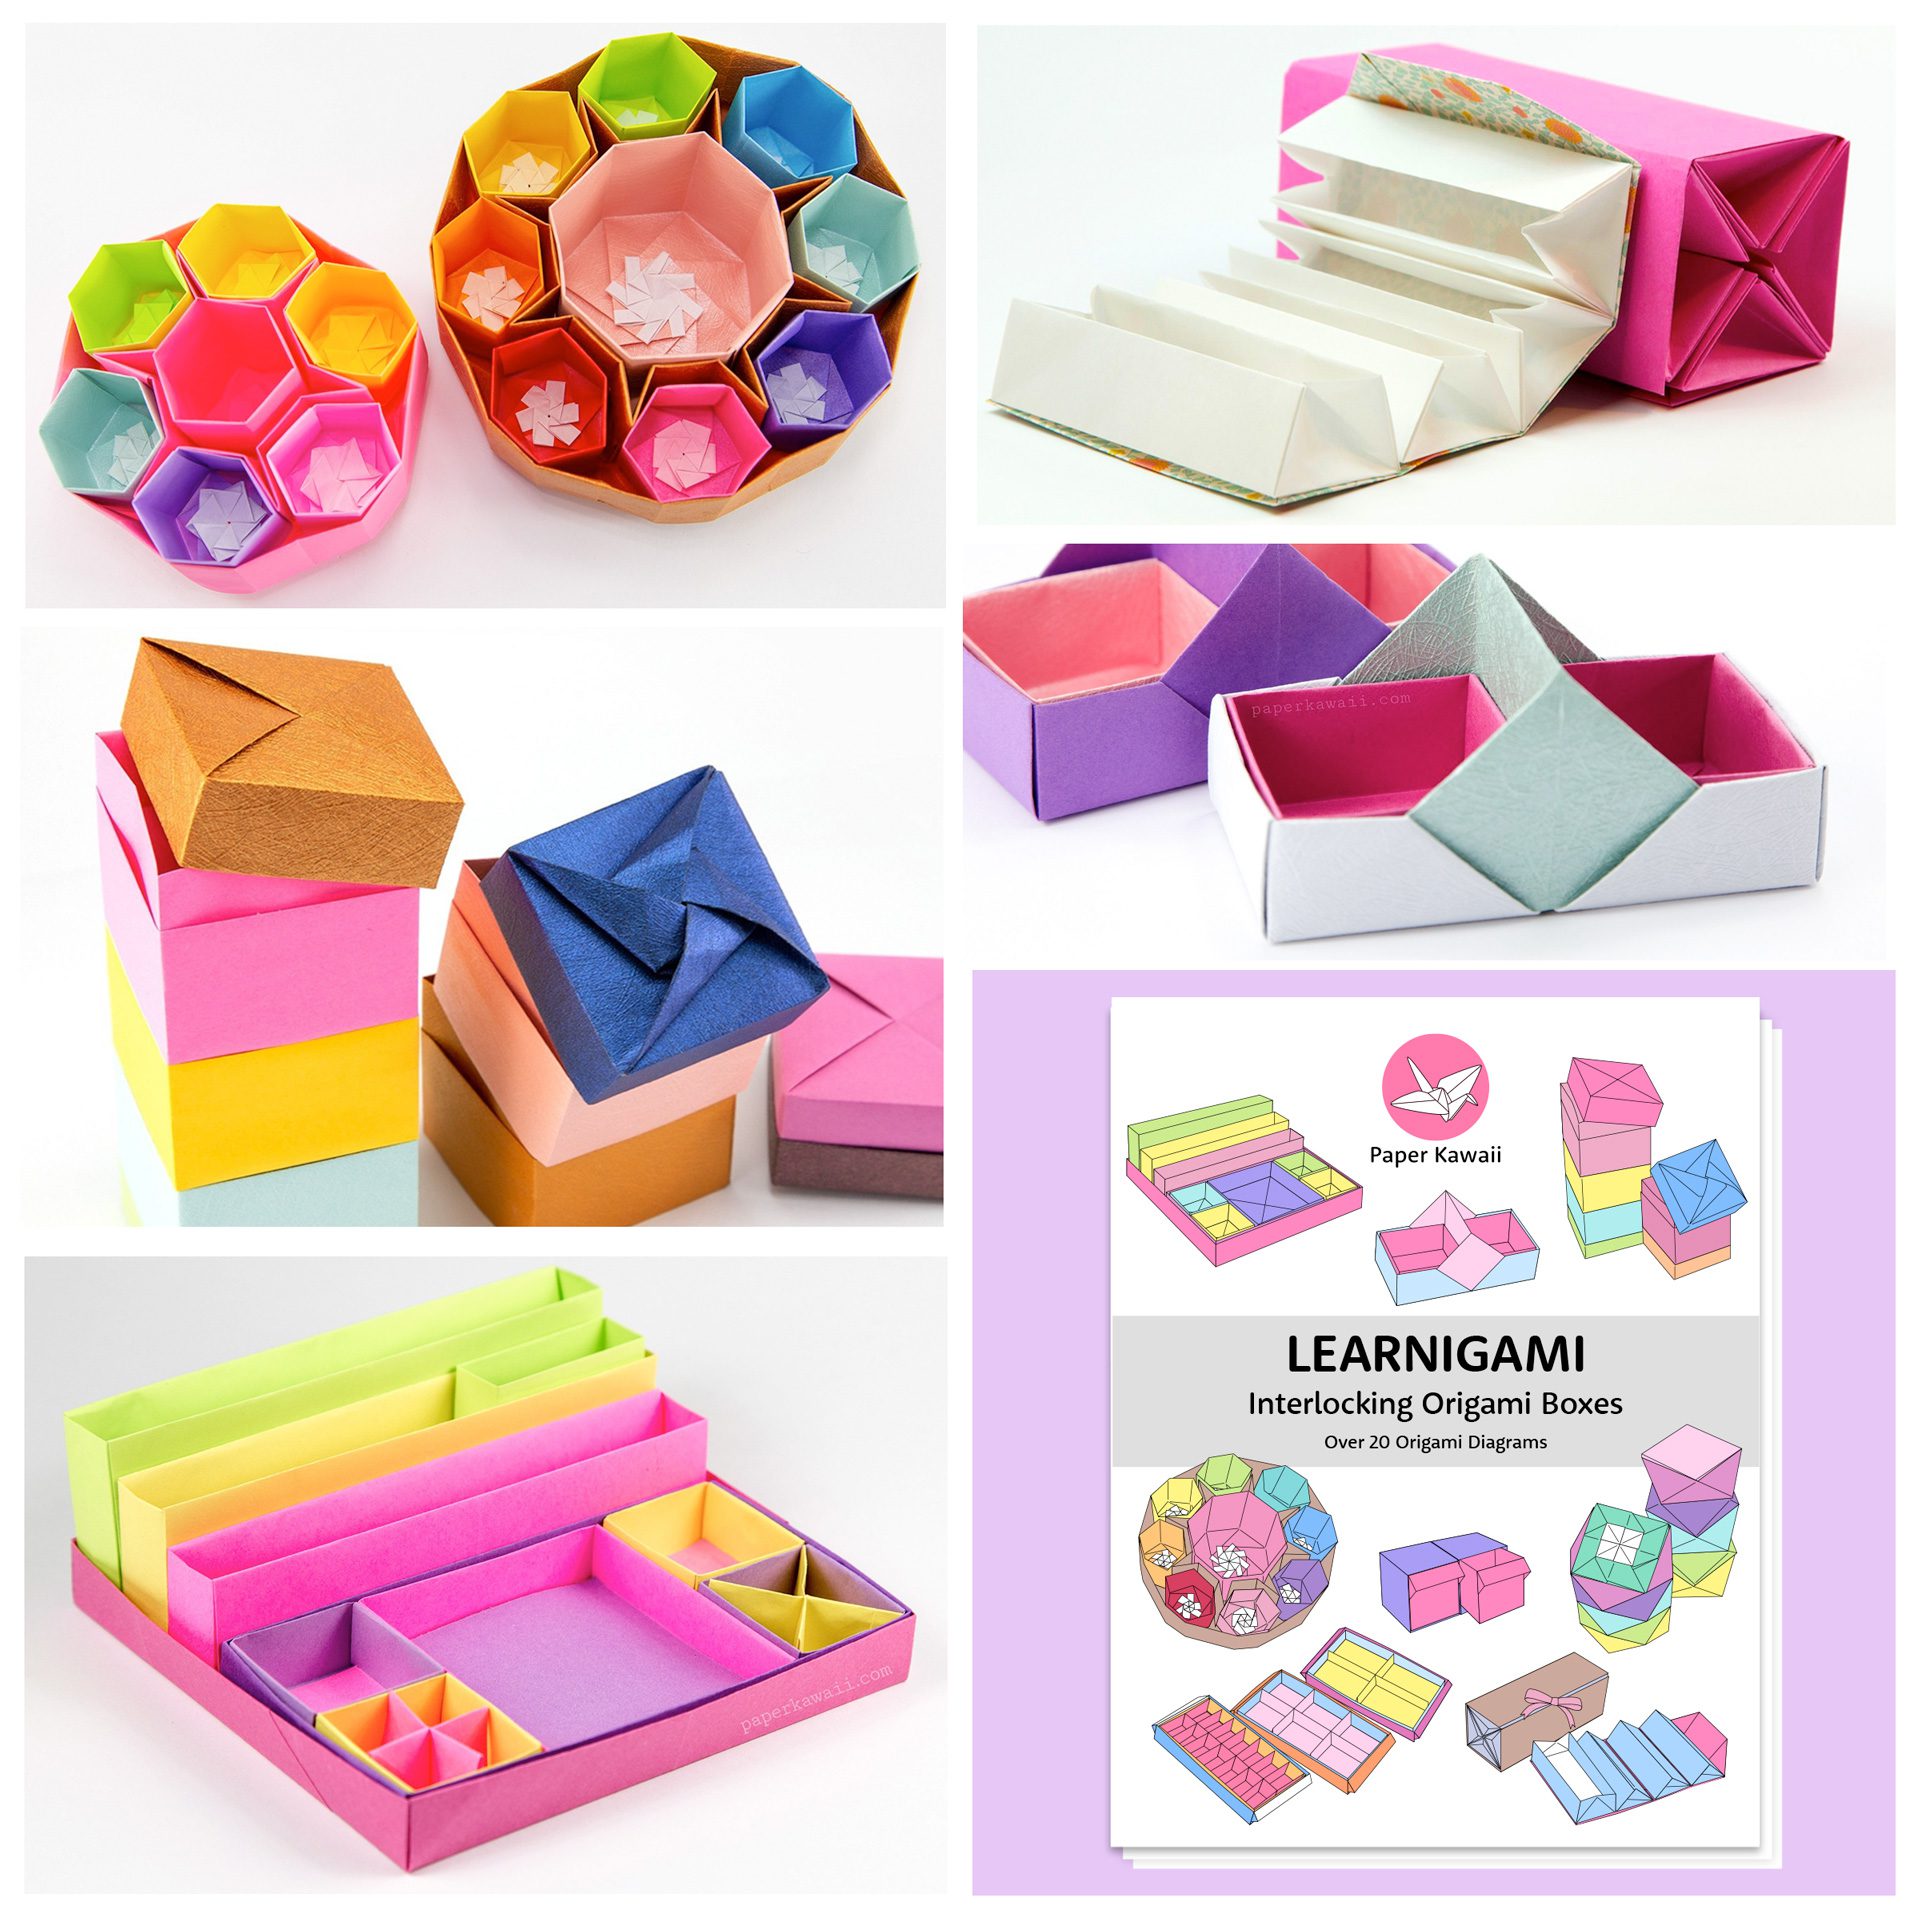 https://shop.paperkawaii.com/wp-content/uploads/2020/06/learnigami-interlocking-origami-boxes-ebook-paper-kawaii.jpg